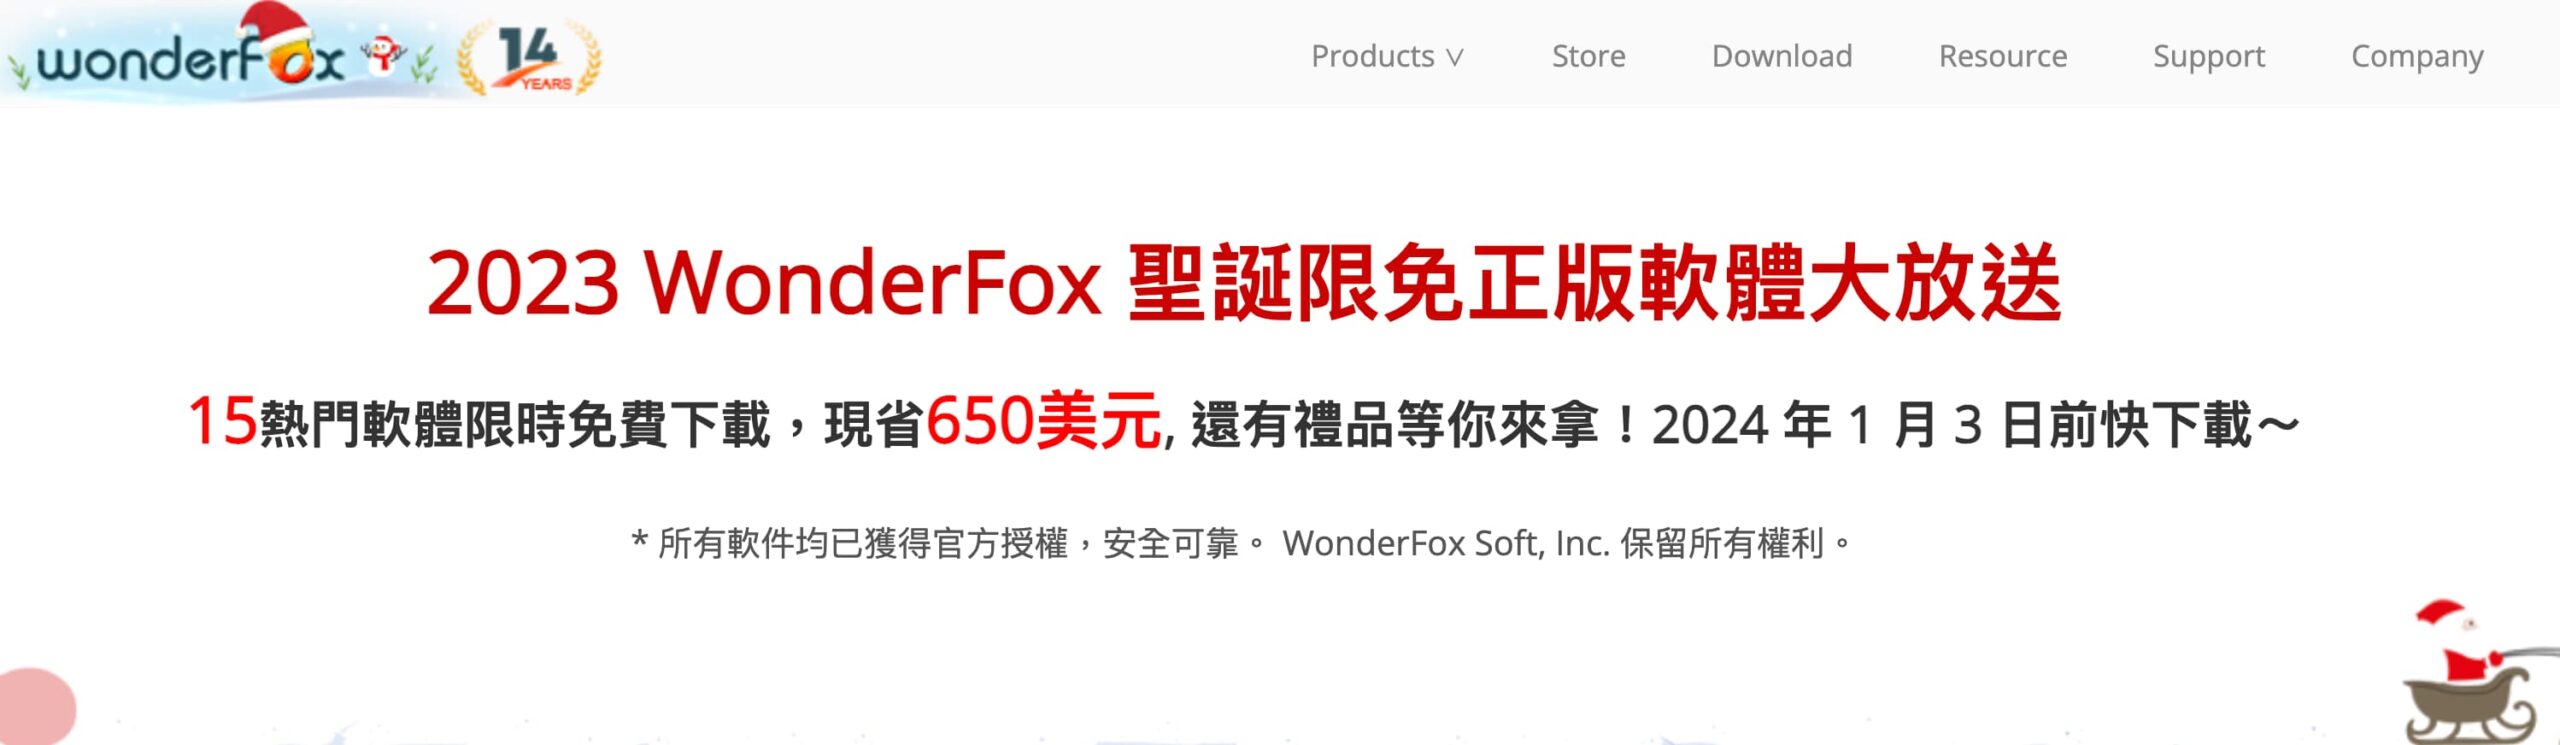 WonderFox 2023 聖誕節活動總整